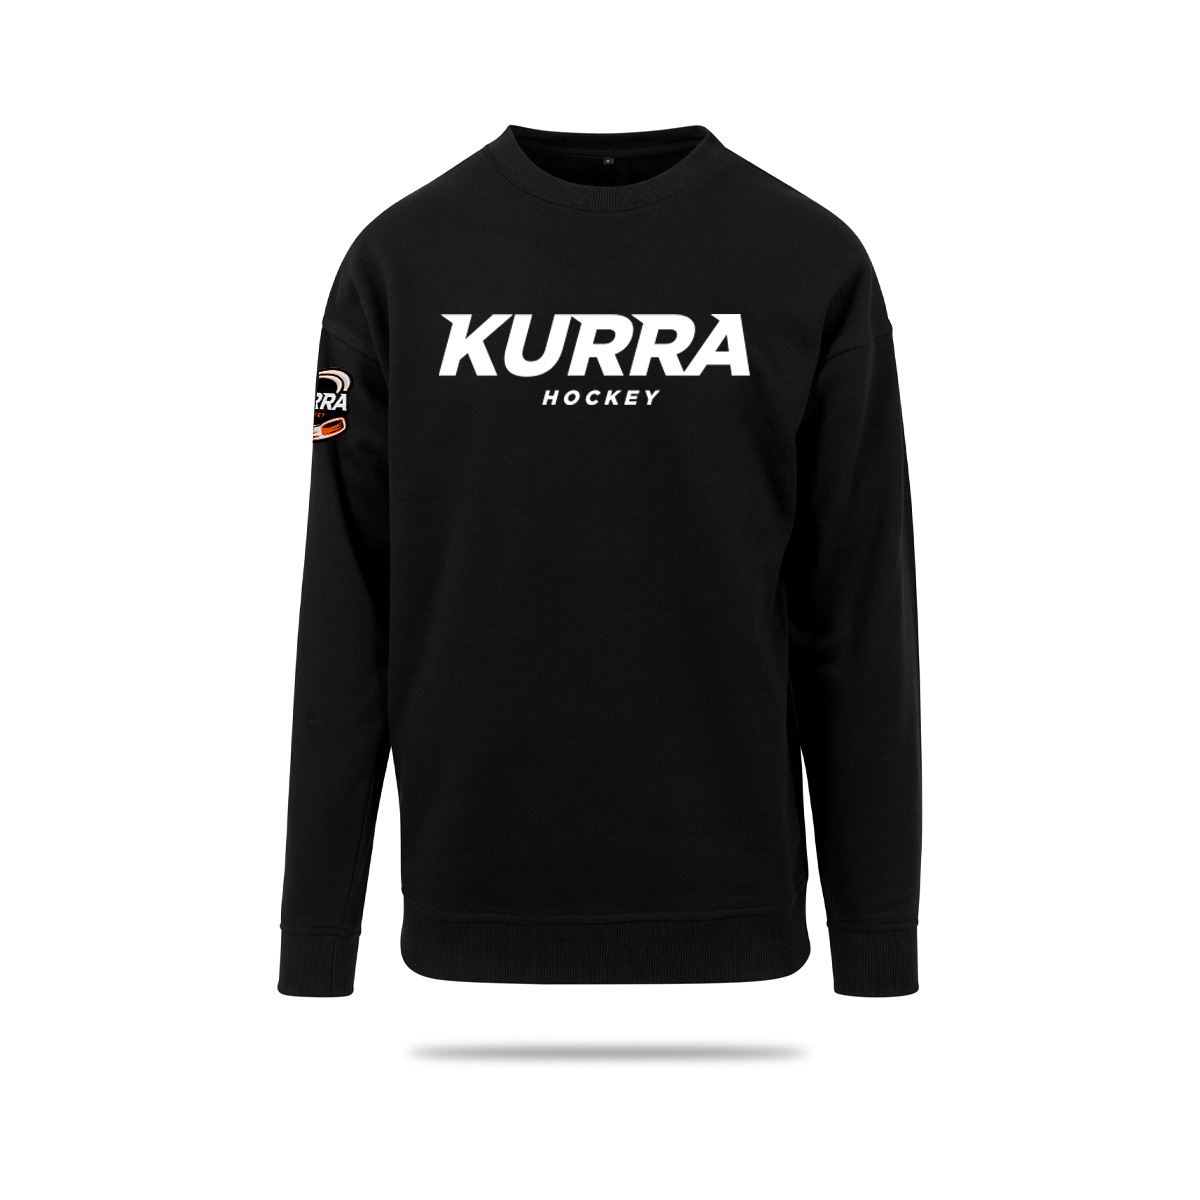 Kurra-fani-6004-musta-text